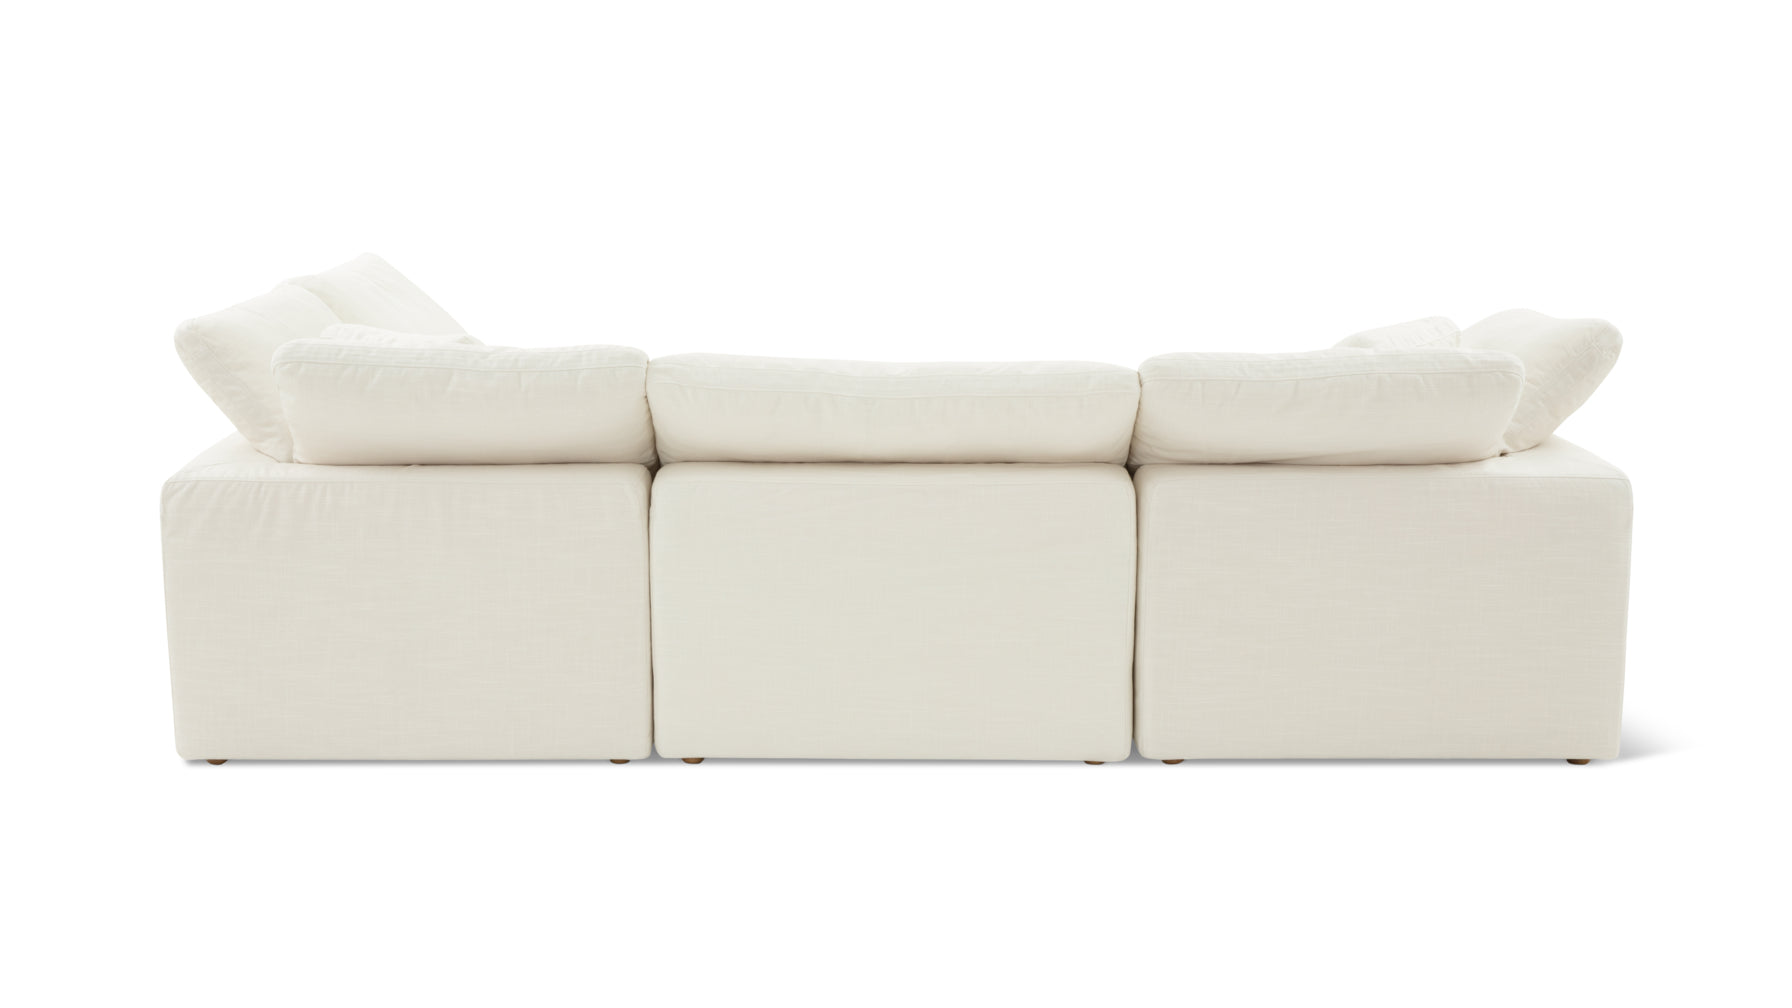 Movie Night™ 3-Piece Modular Sofa, Standard, Cream Linen - Image 8